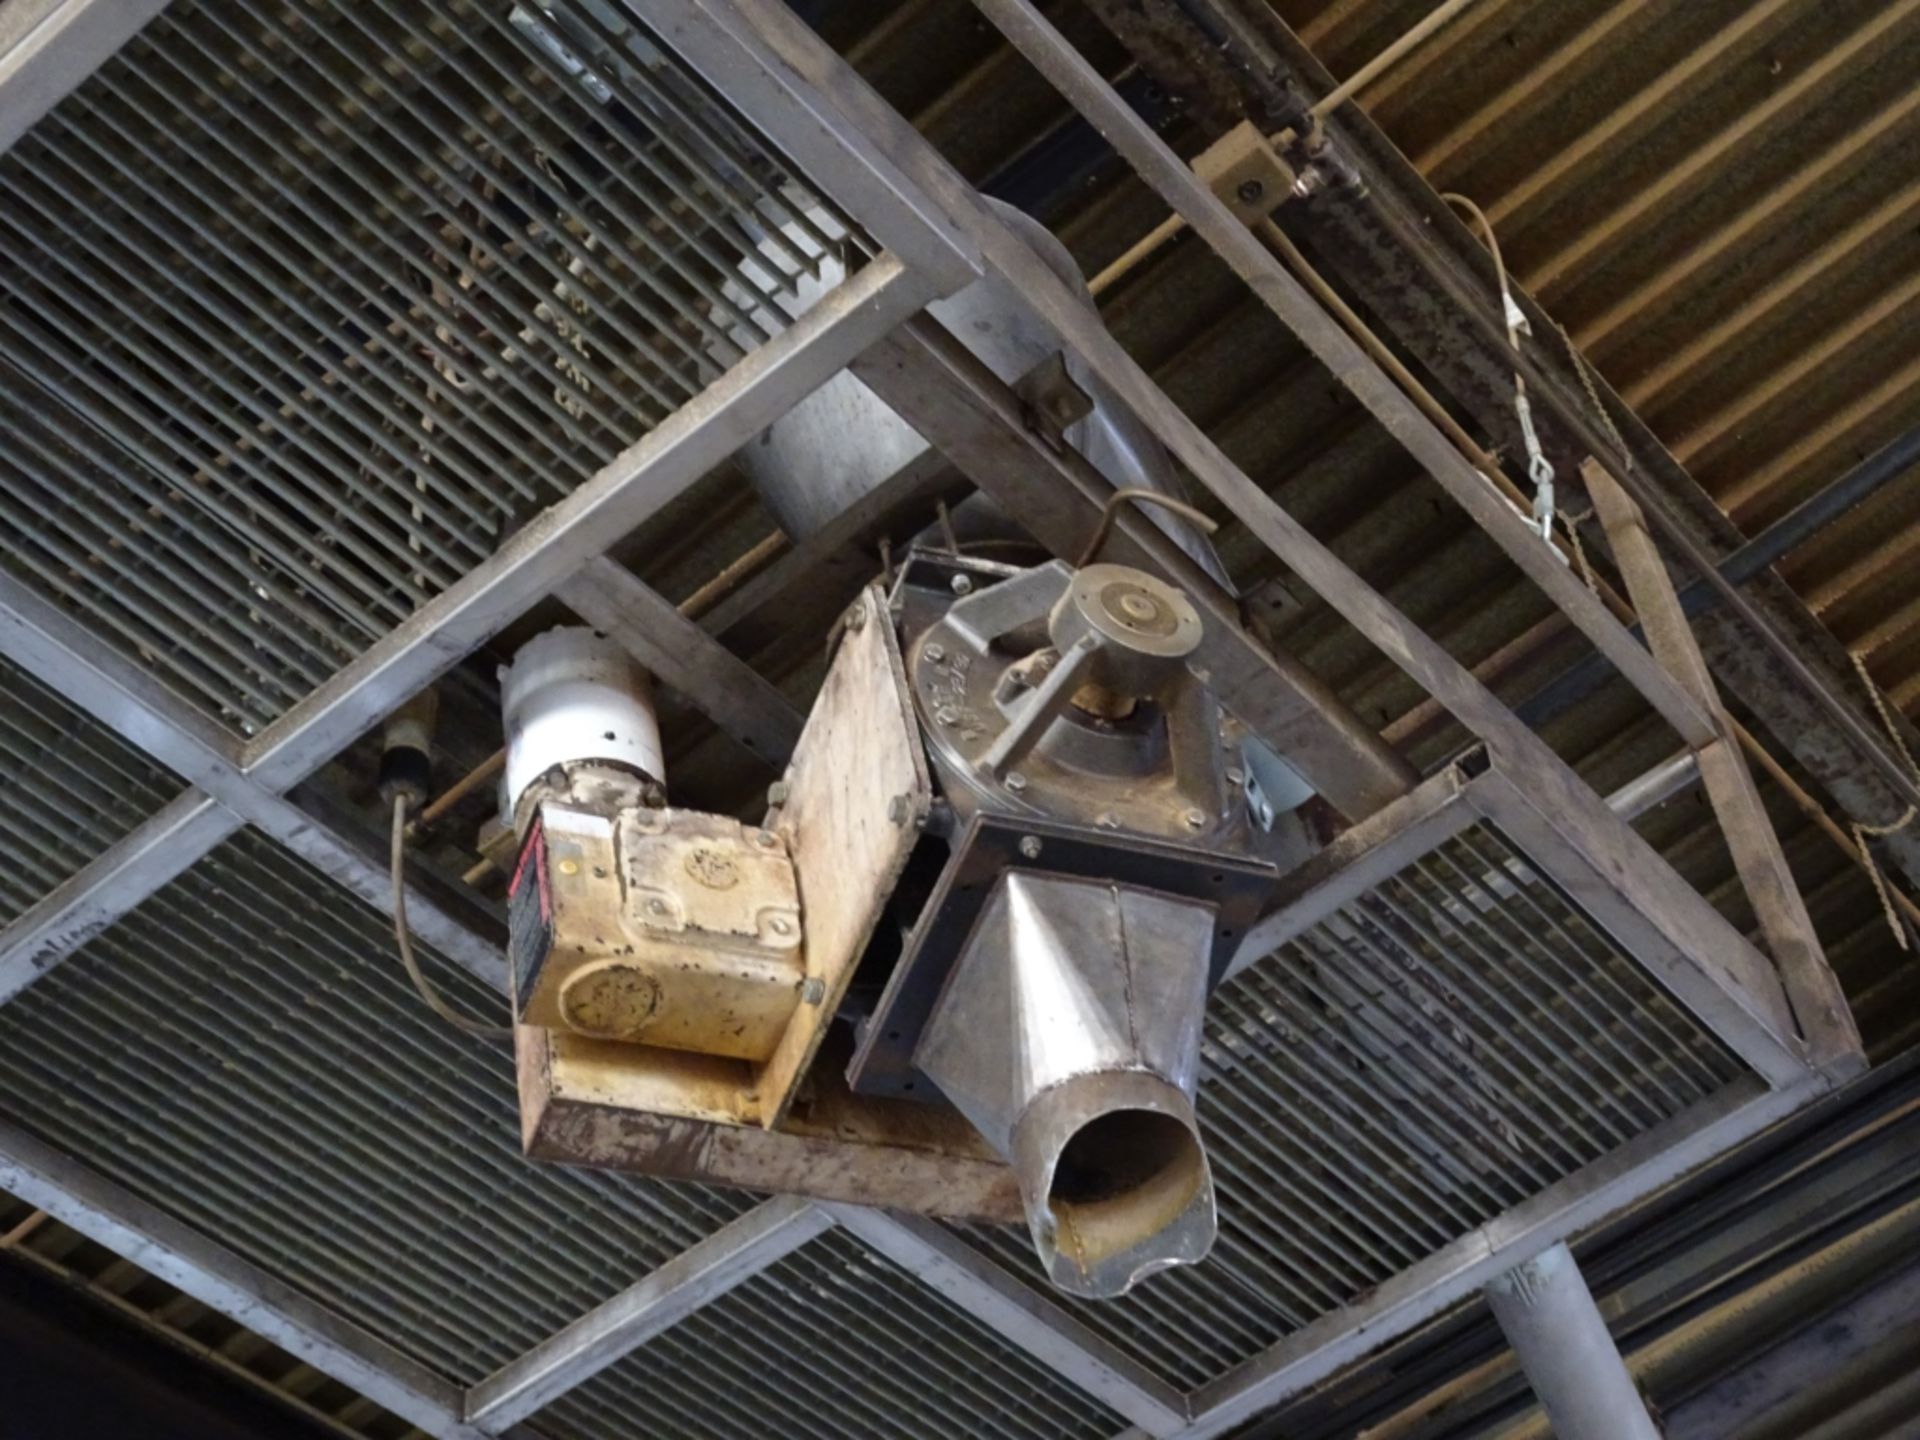 Buhler 32x32"x10' Airlock Material Drying Bin sn 54980948 w/ Associated Blow Motor, Material Feed - Image 17 of 19